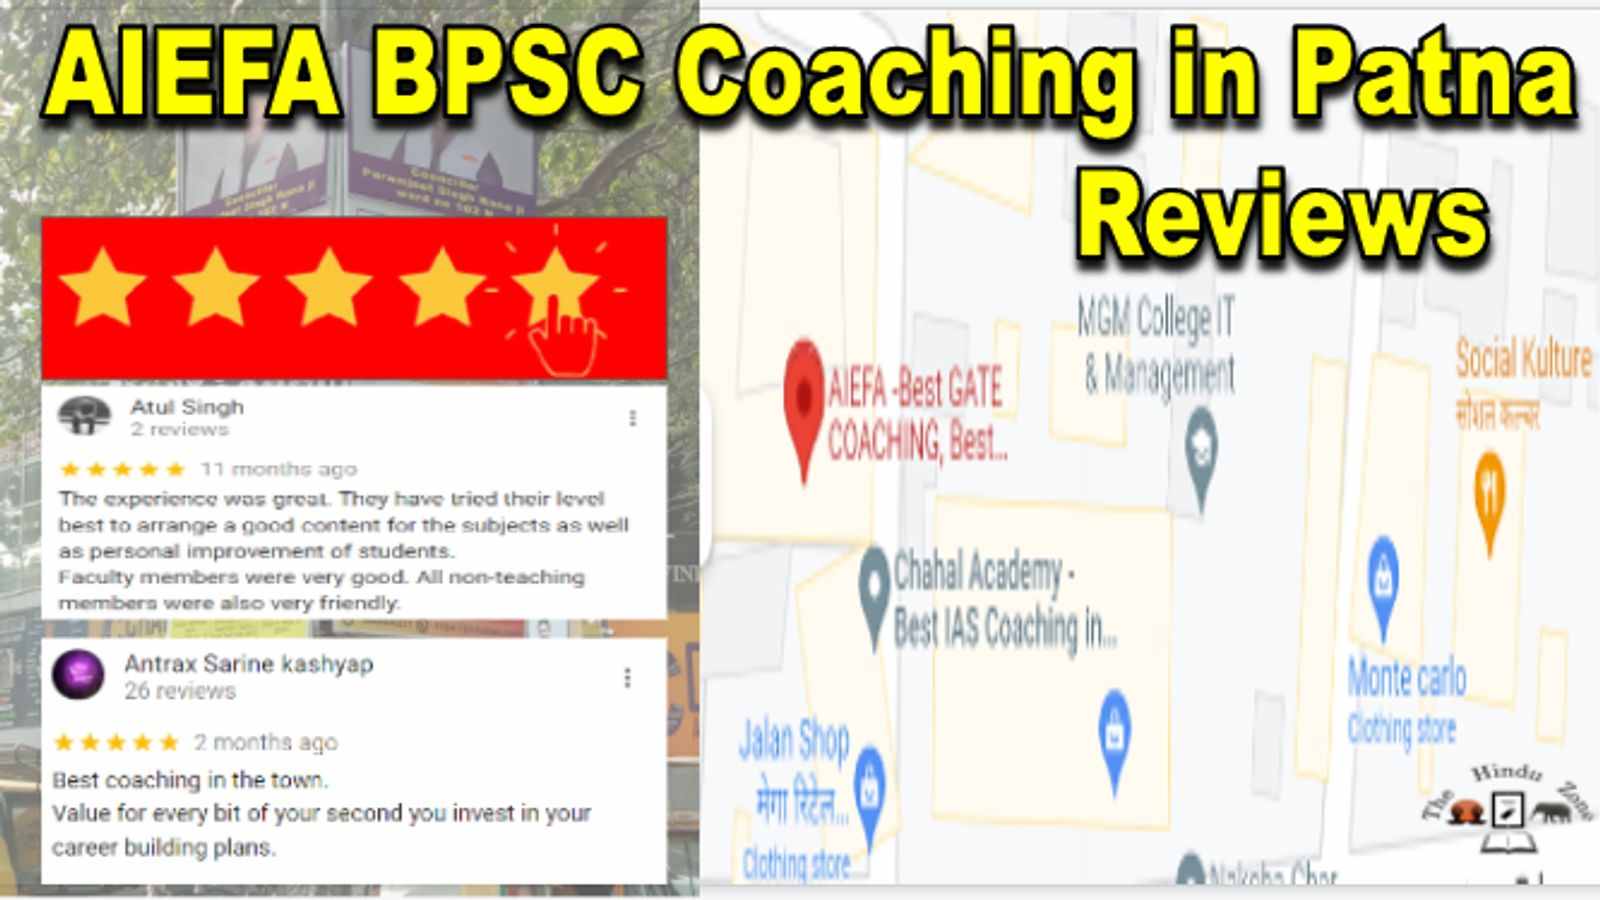 AIEFA BPSC Coaching in Patna Reviews